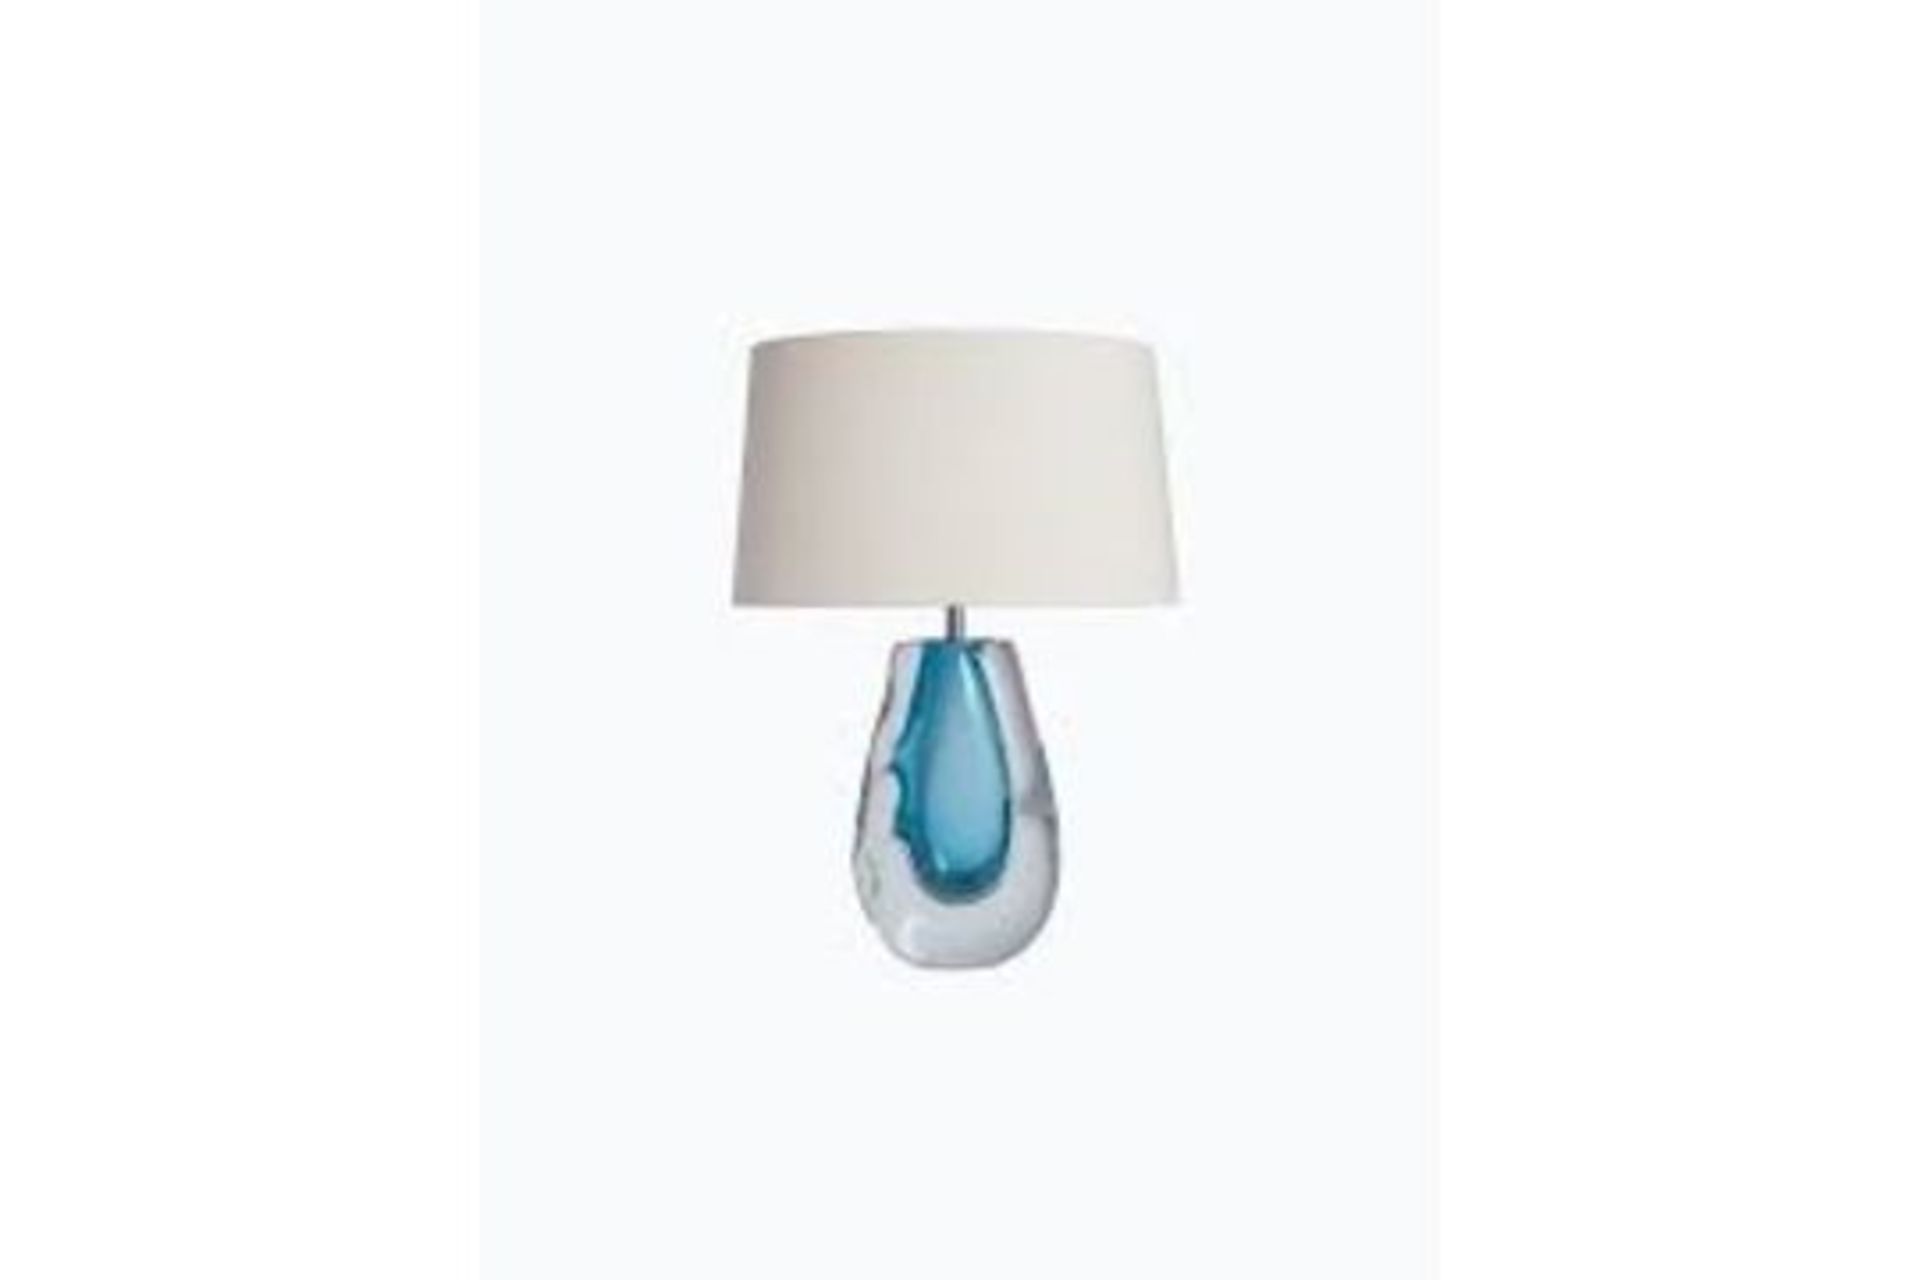 Heathfield and Co Anya Table Lamp - Image 4 of 5